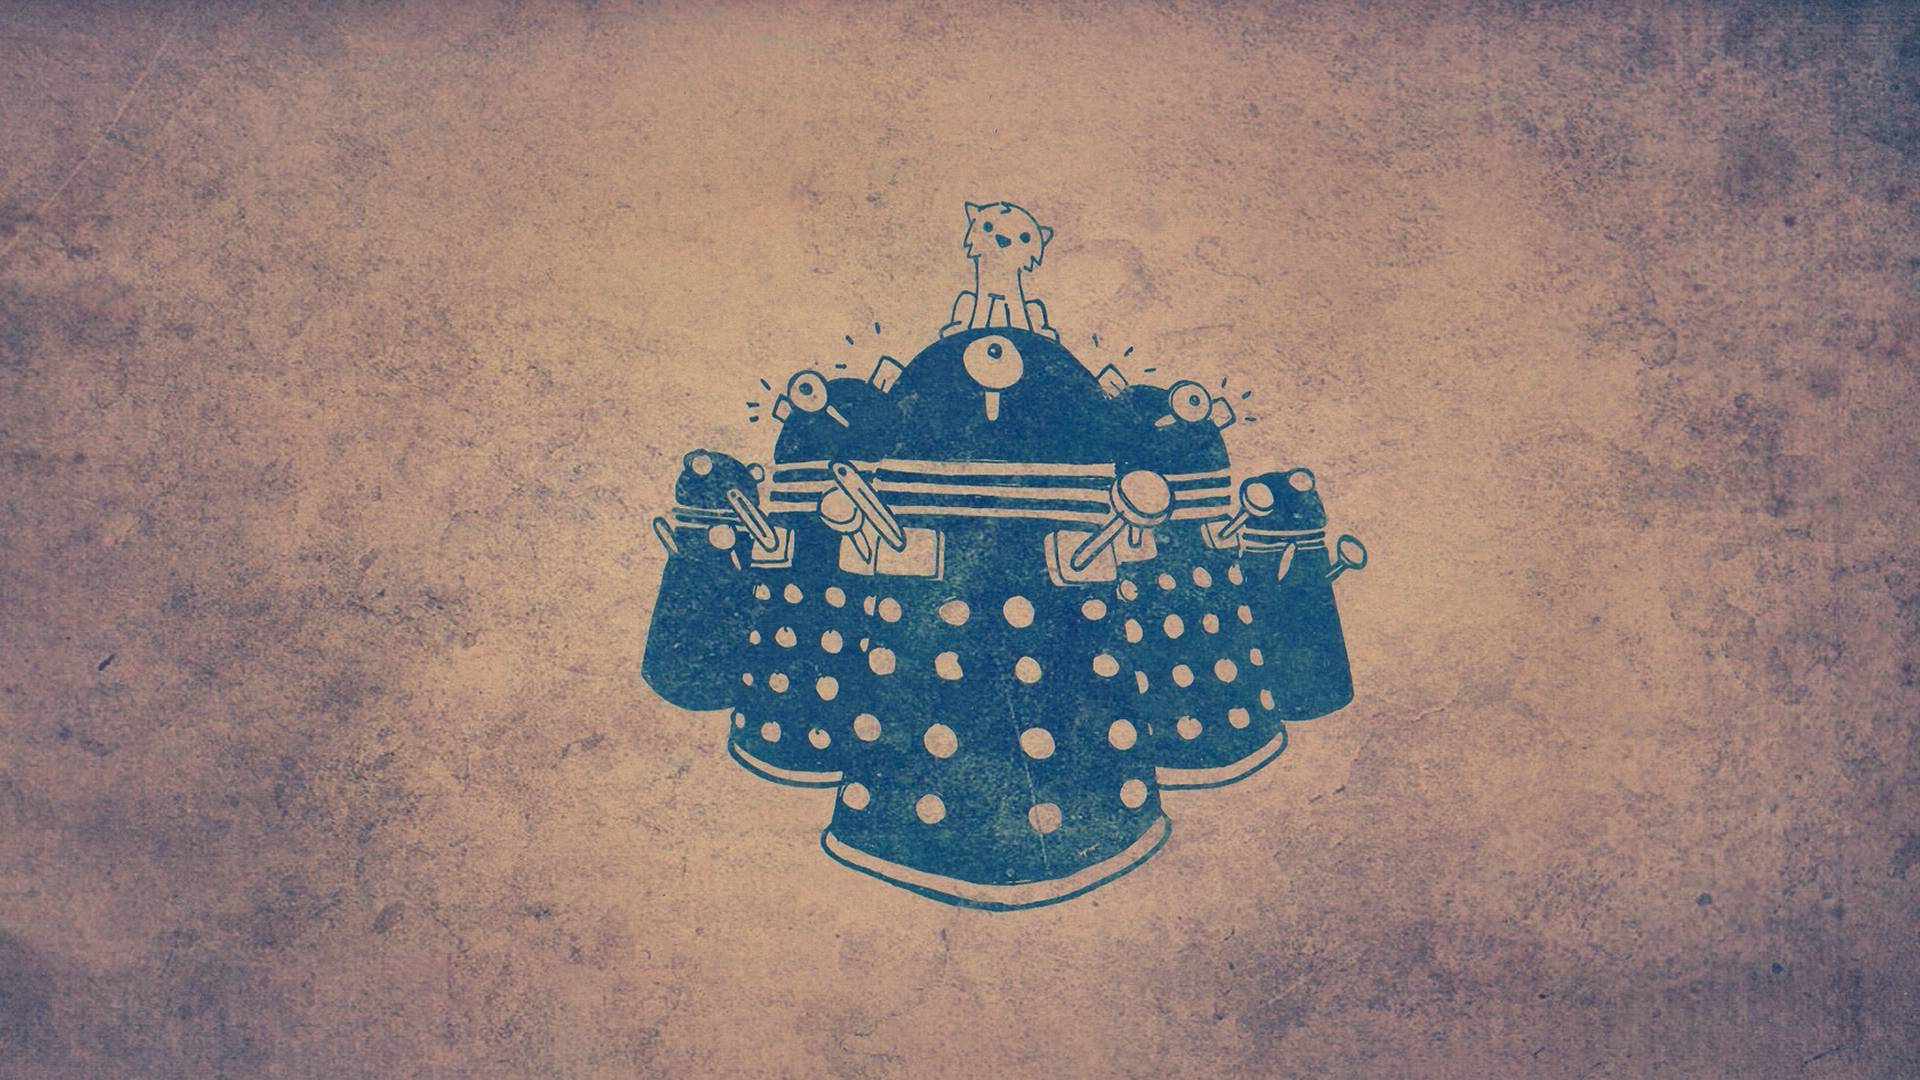 Dalek Wallpaper